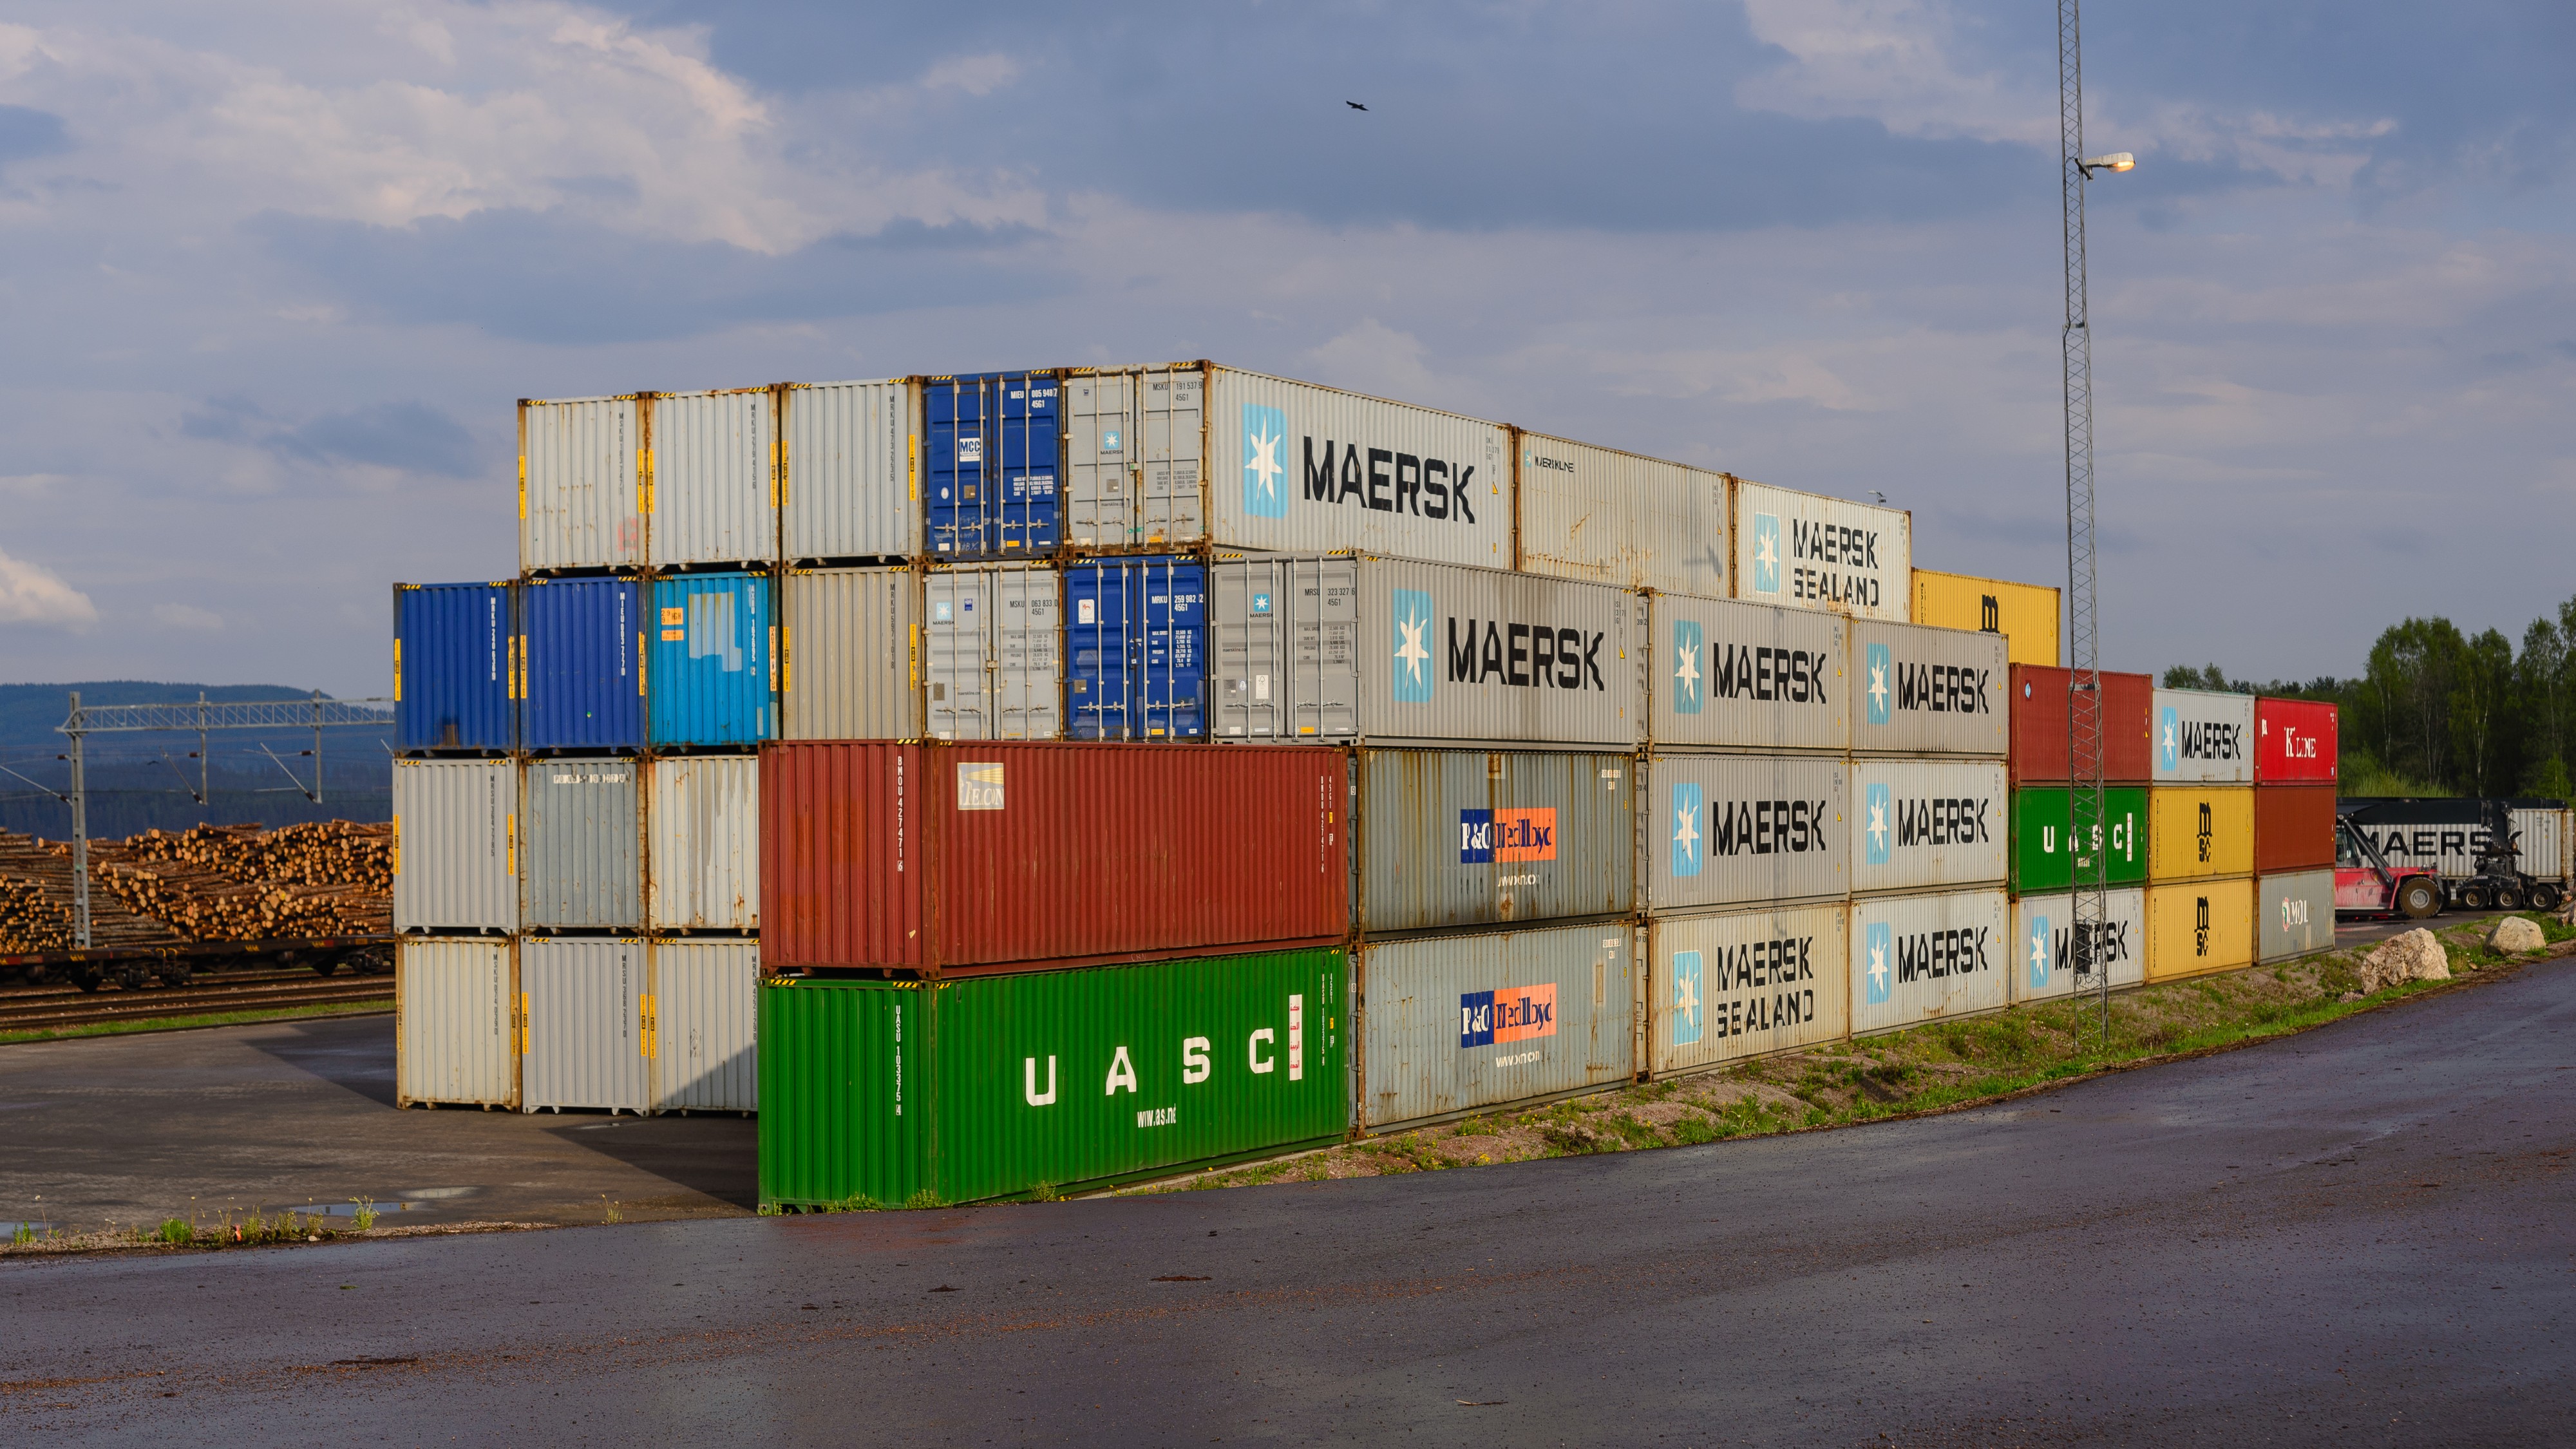 Insjön Containerterminal May 2018 03